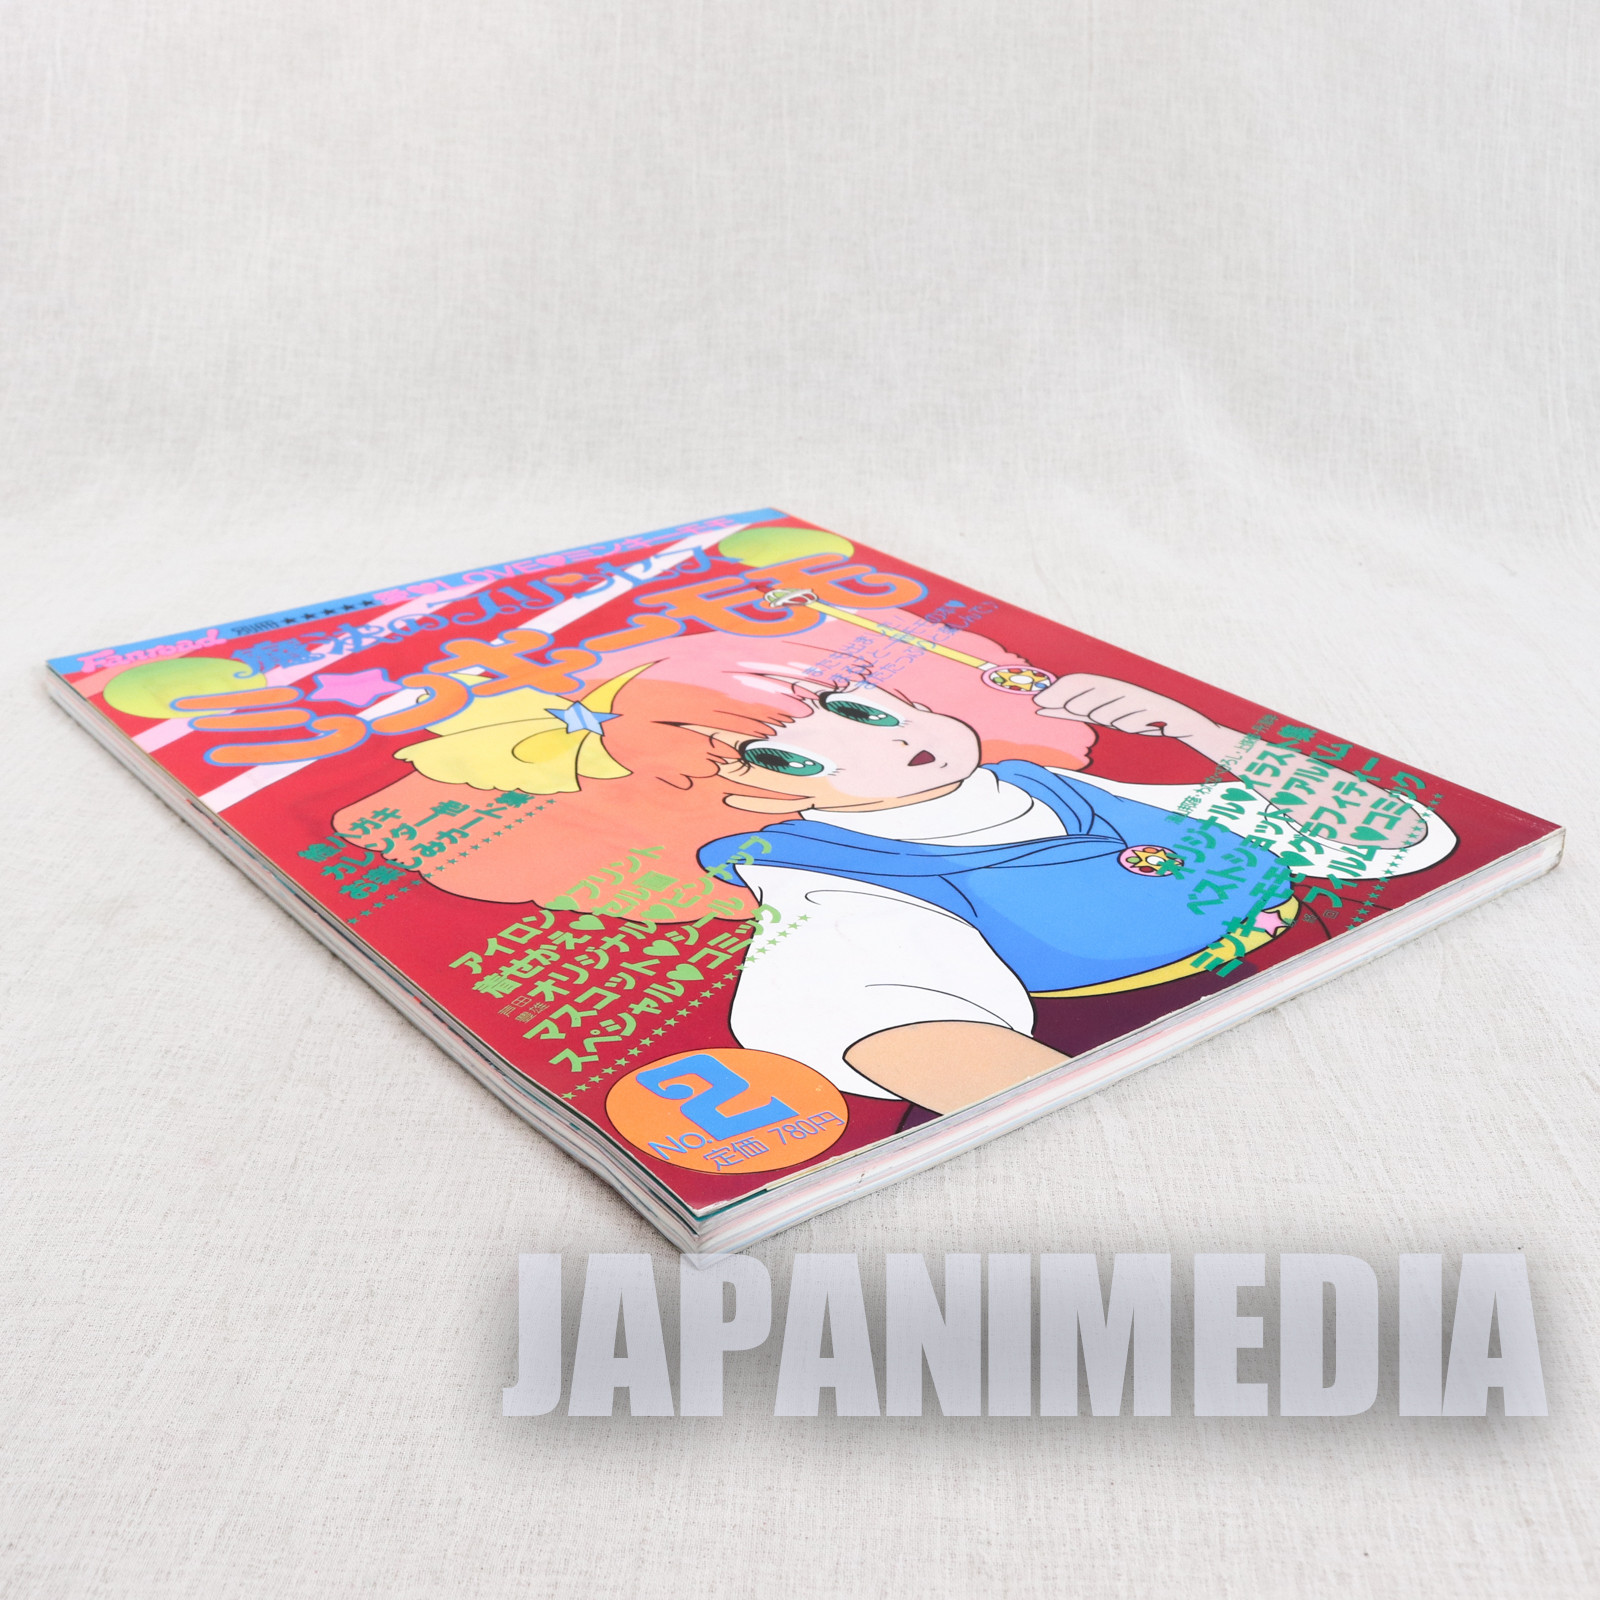 Japan Animation Magical Princess Minky Momo Book Vintage F/S